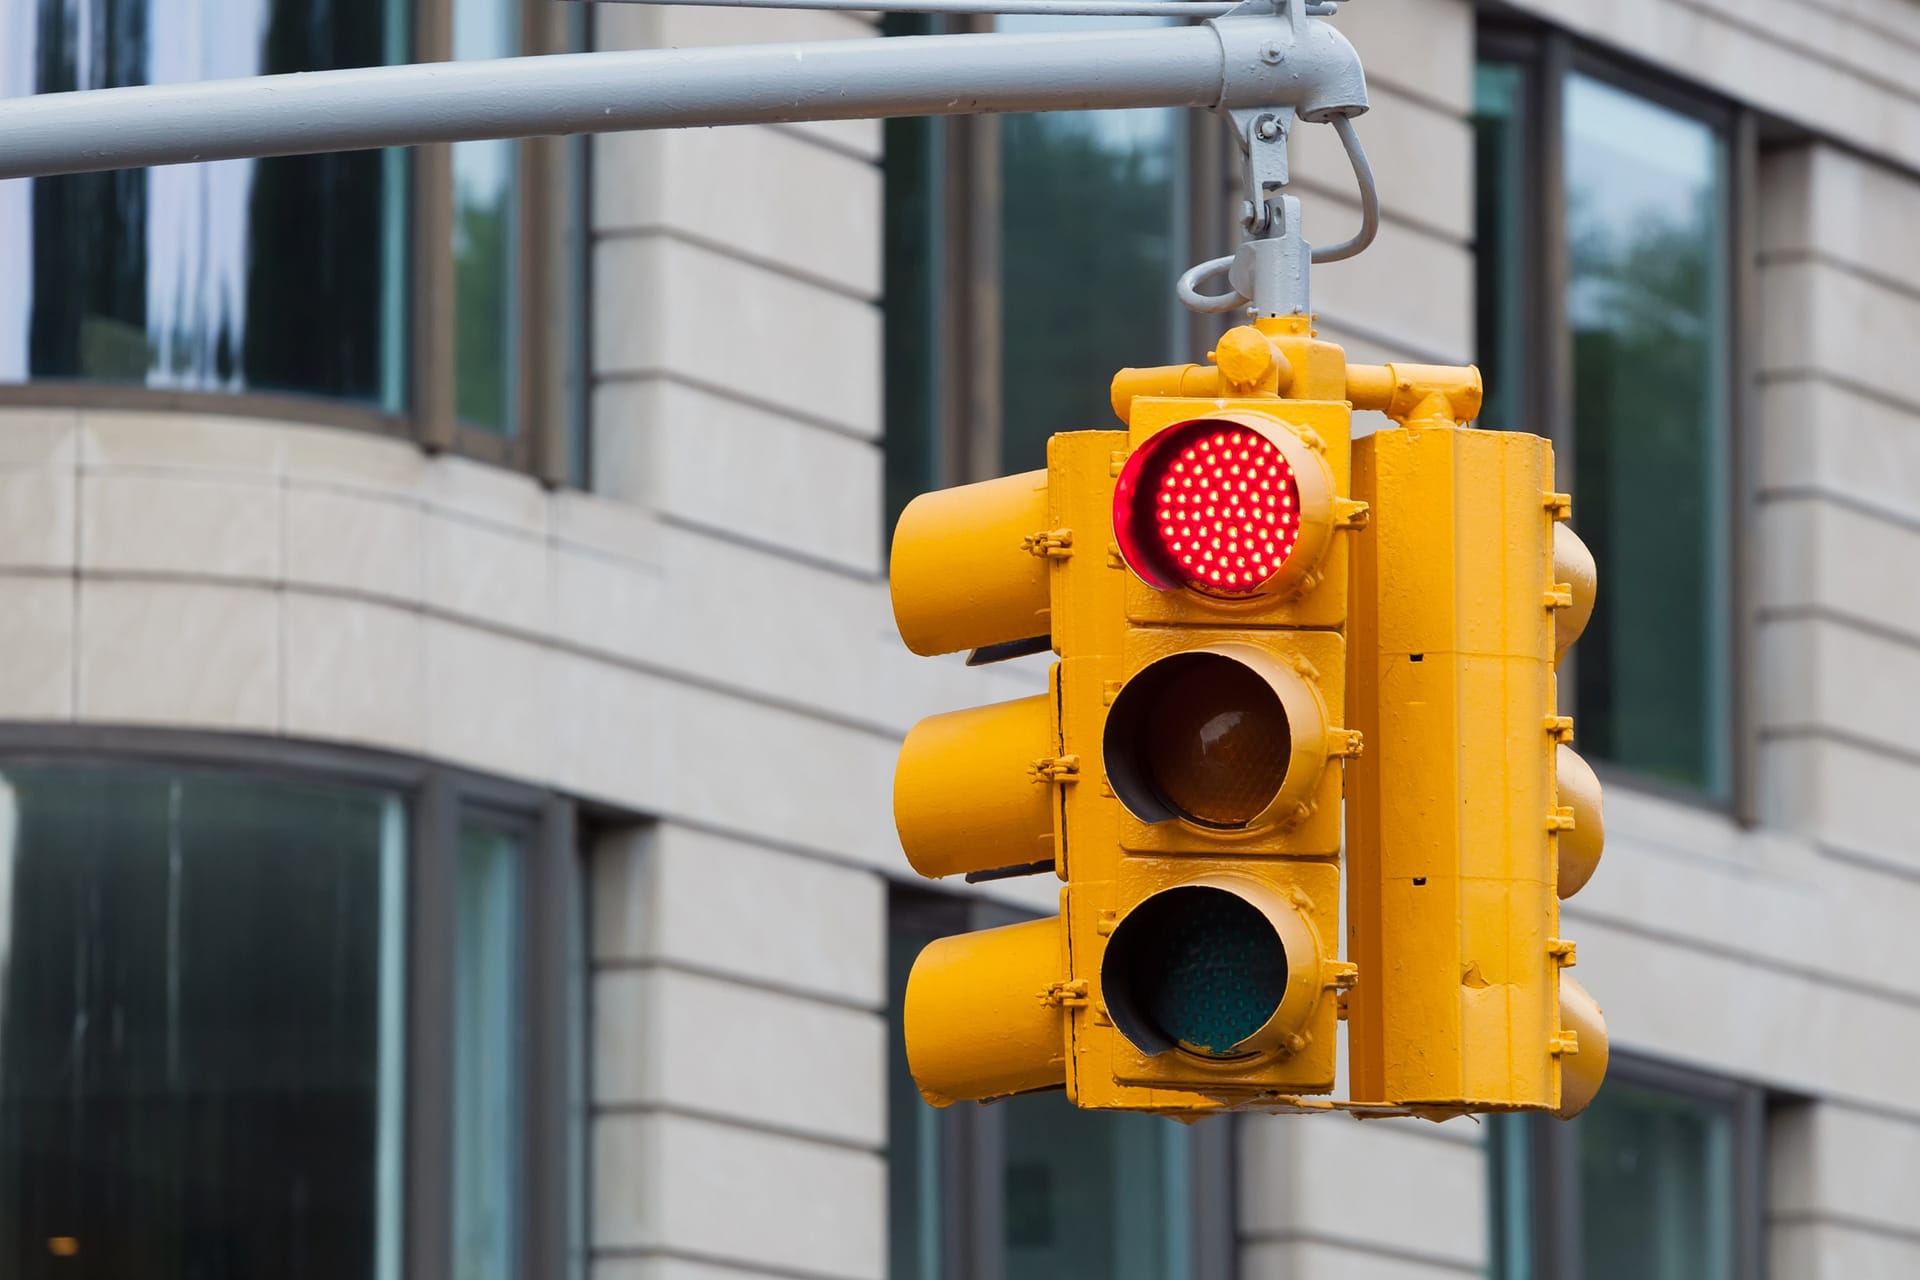 Traffic light in New York City, USA.